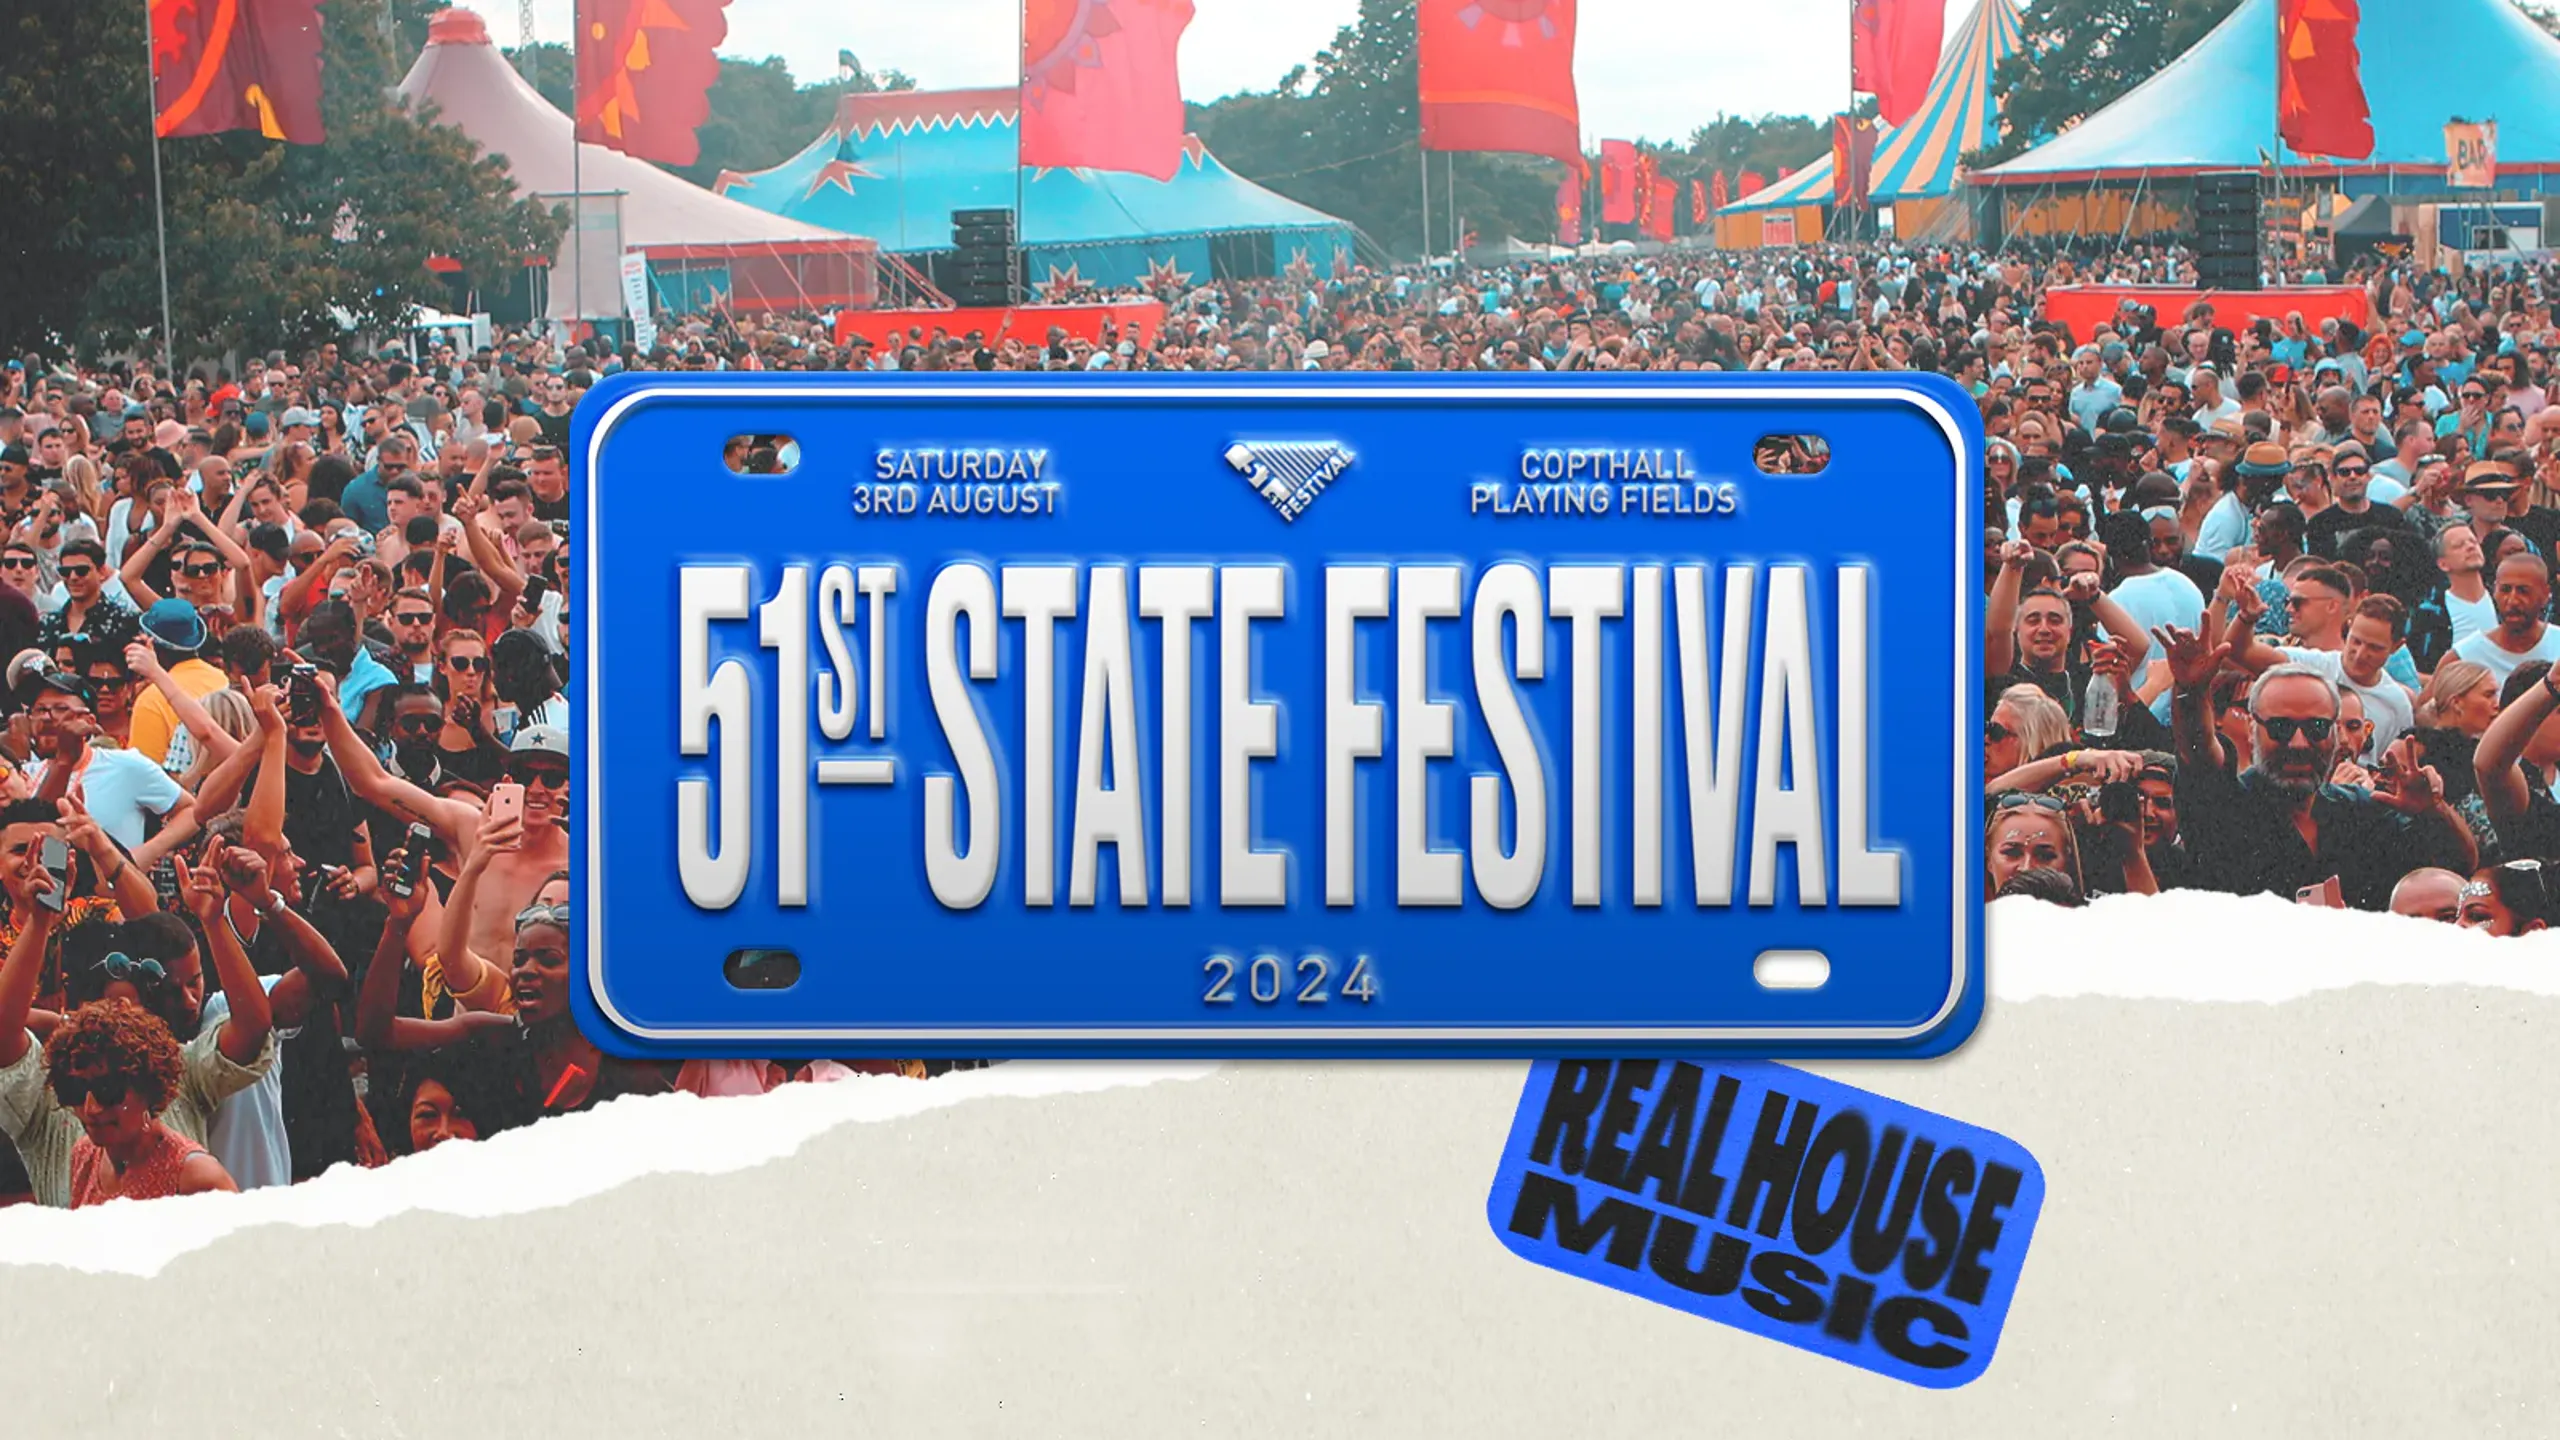 ▷ 51st State Festival 2024